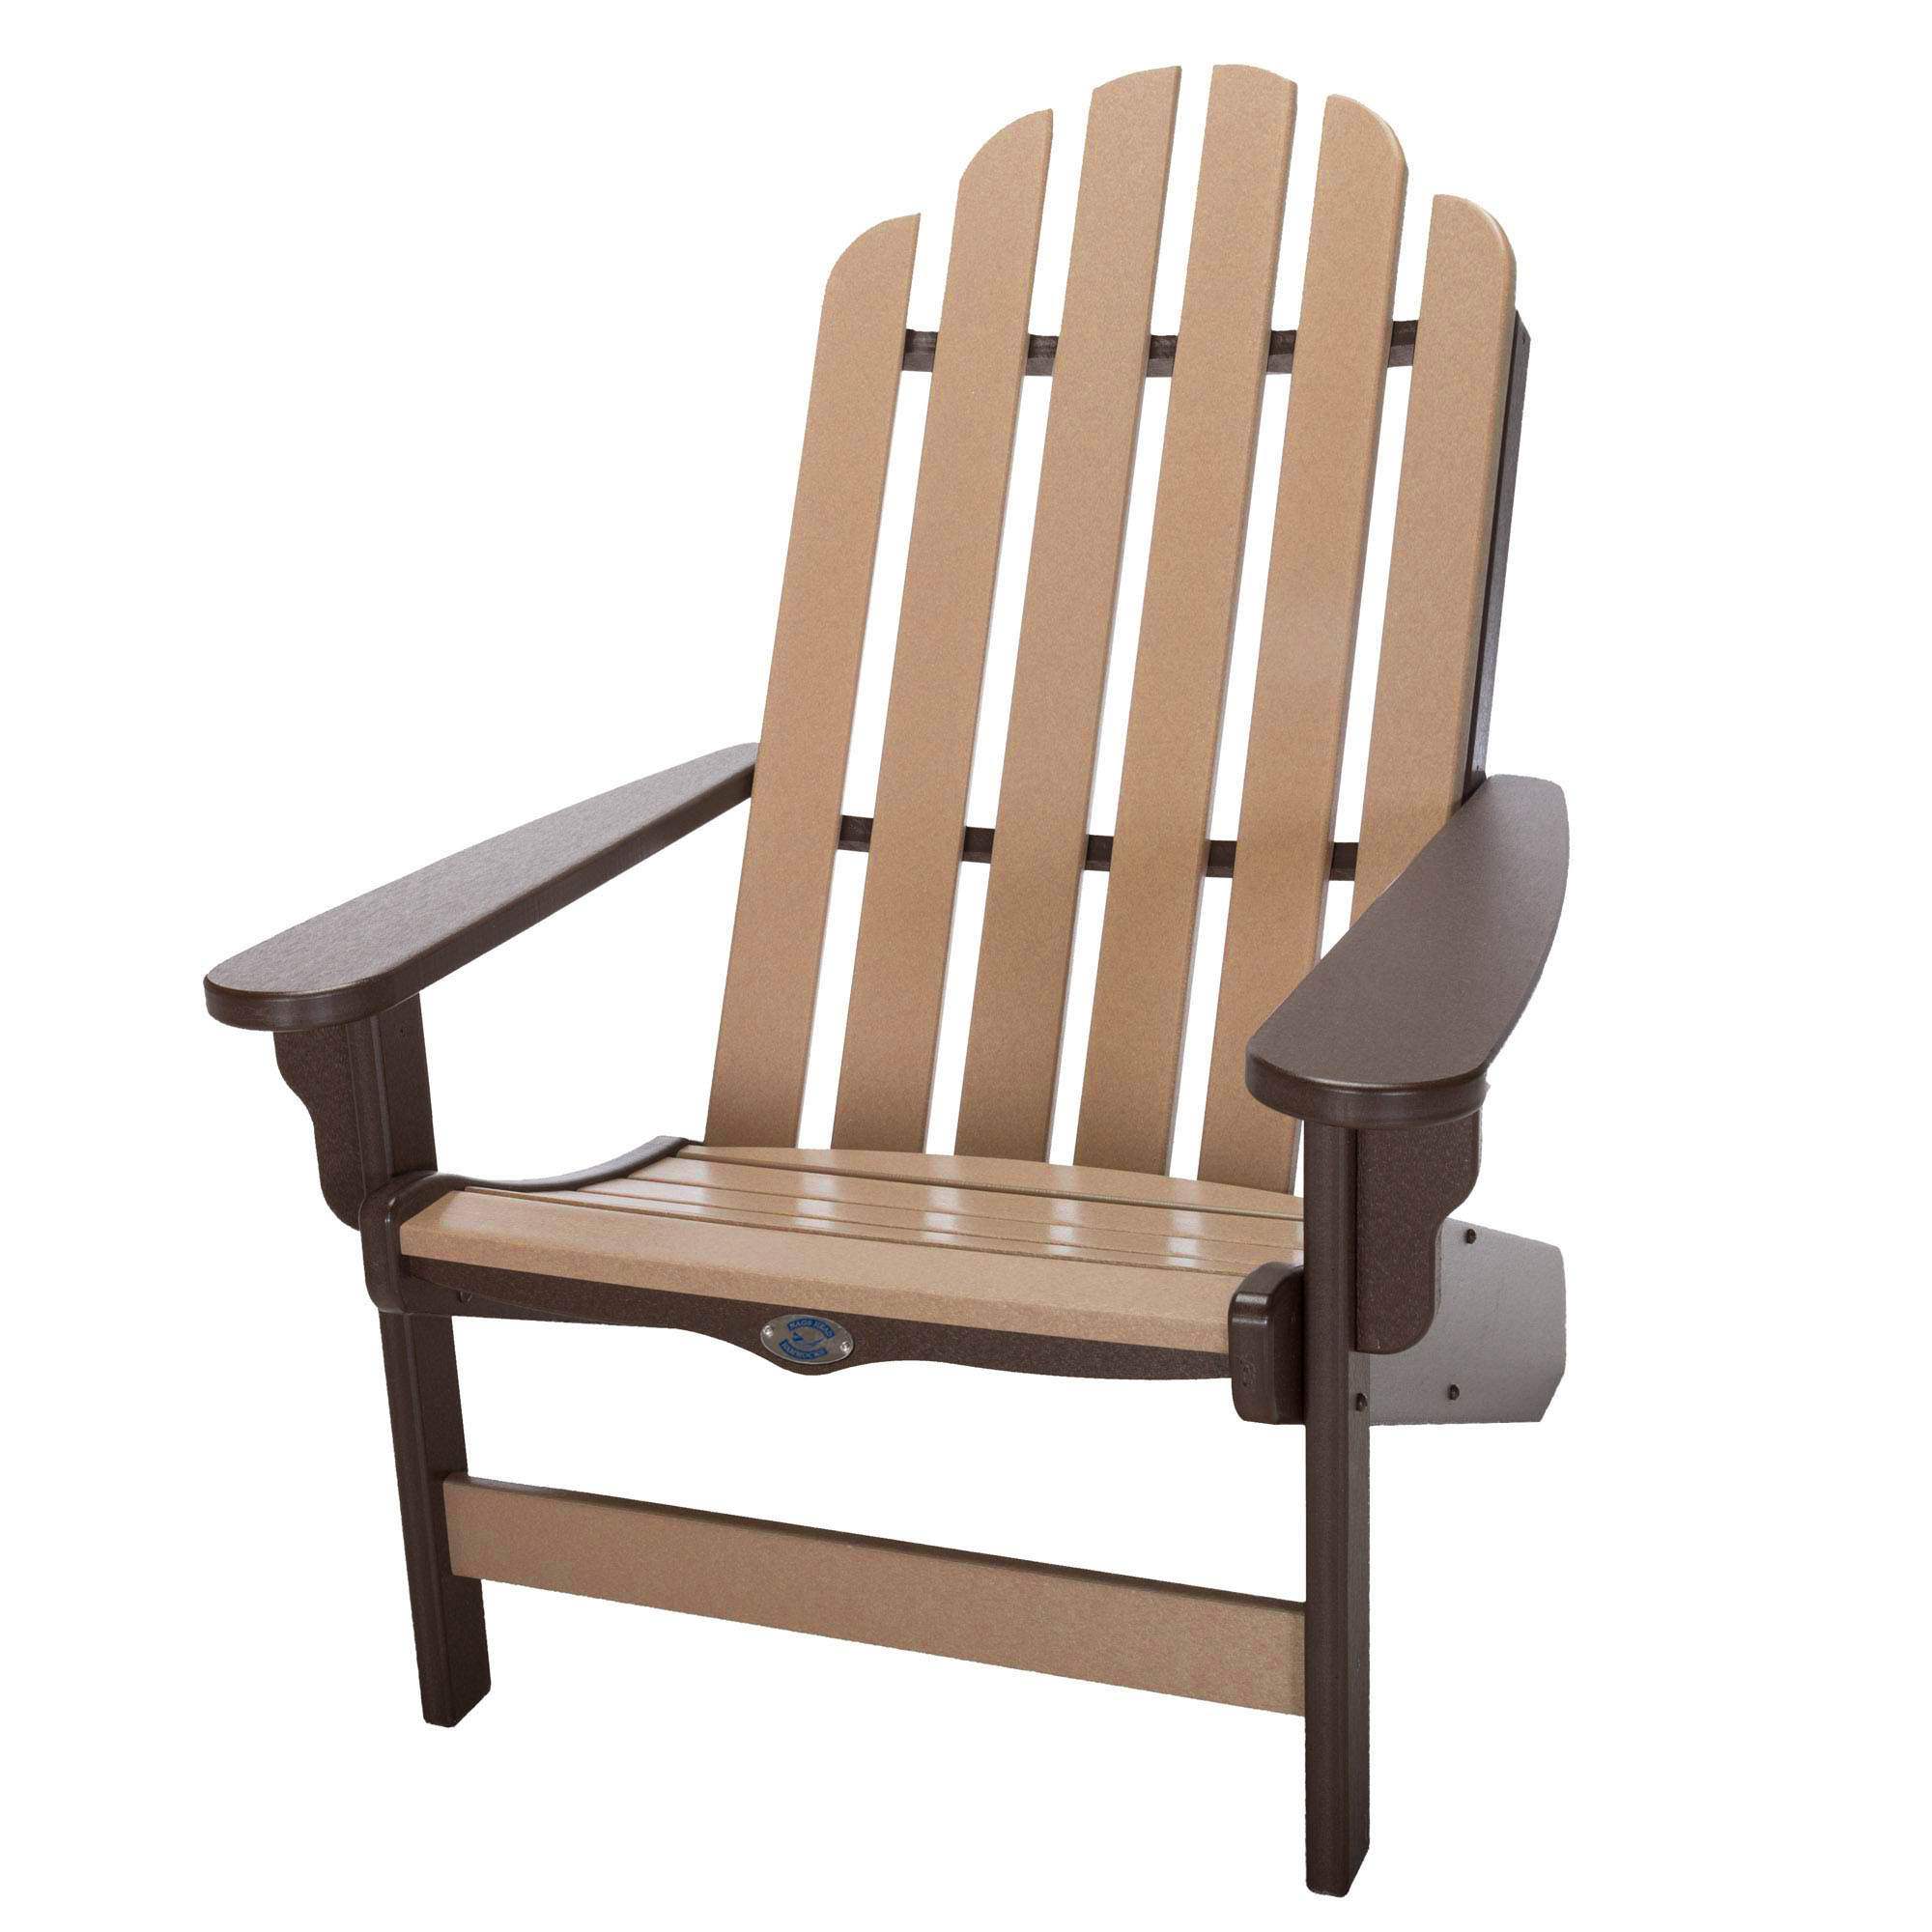 Classic Adirondack Chair - Chocolate and Cedar